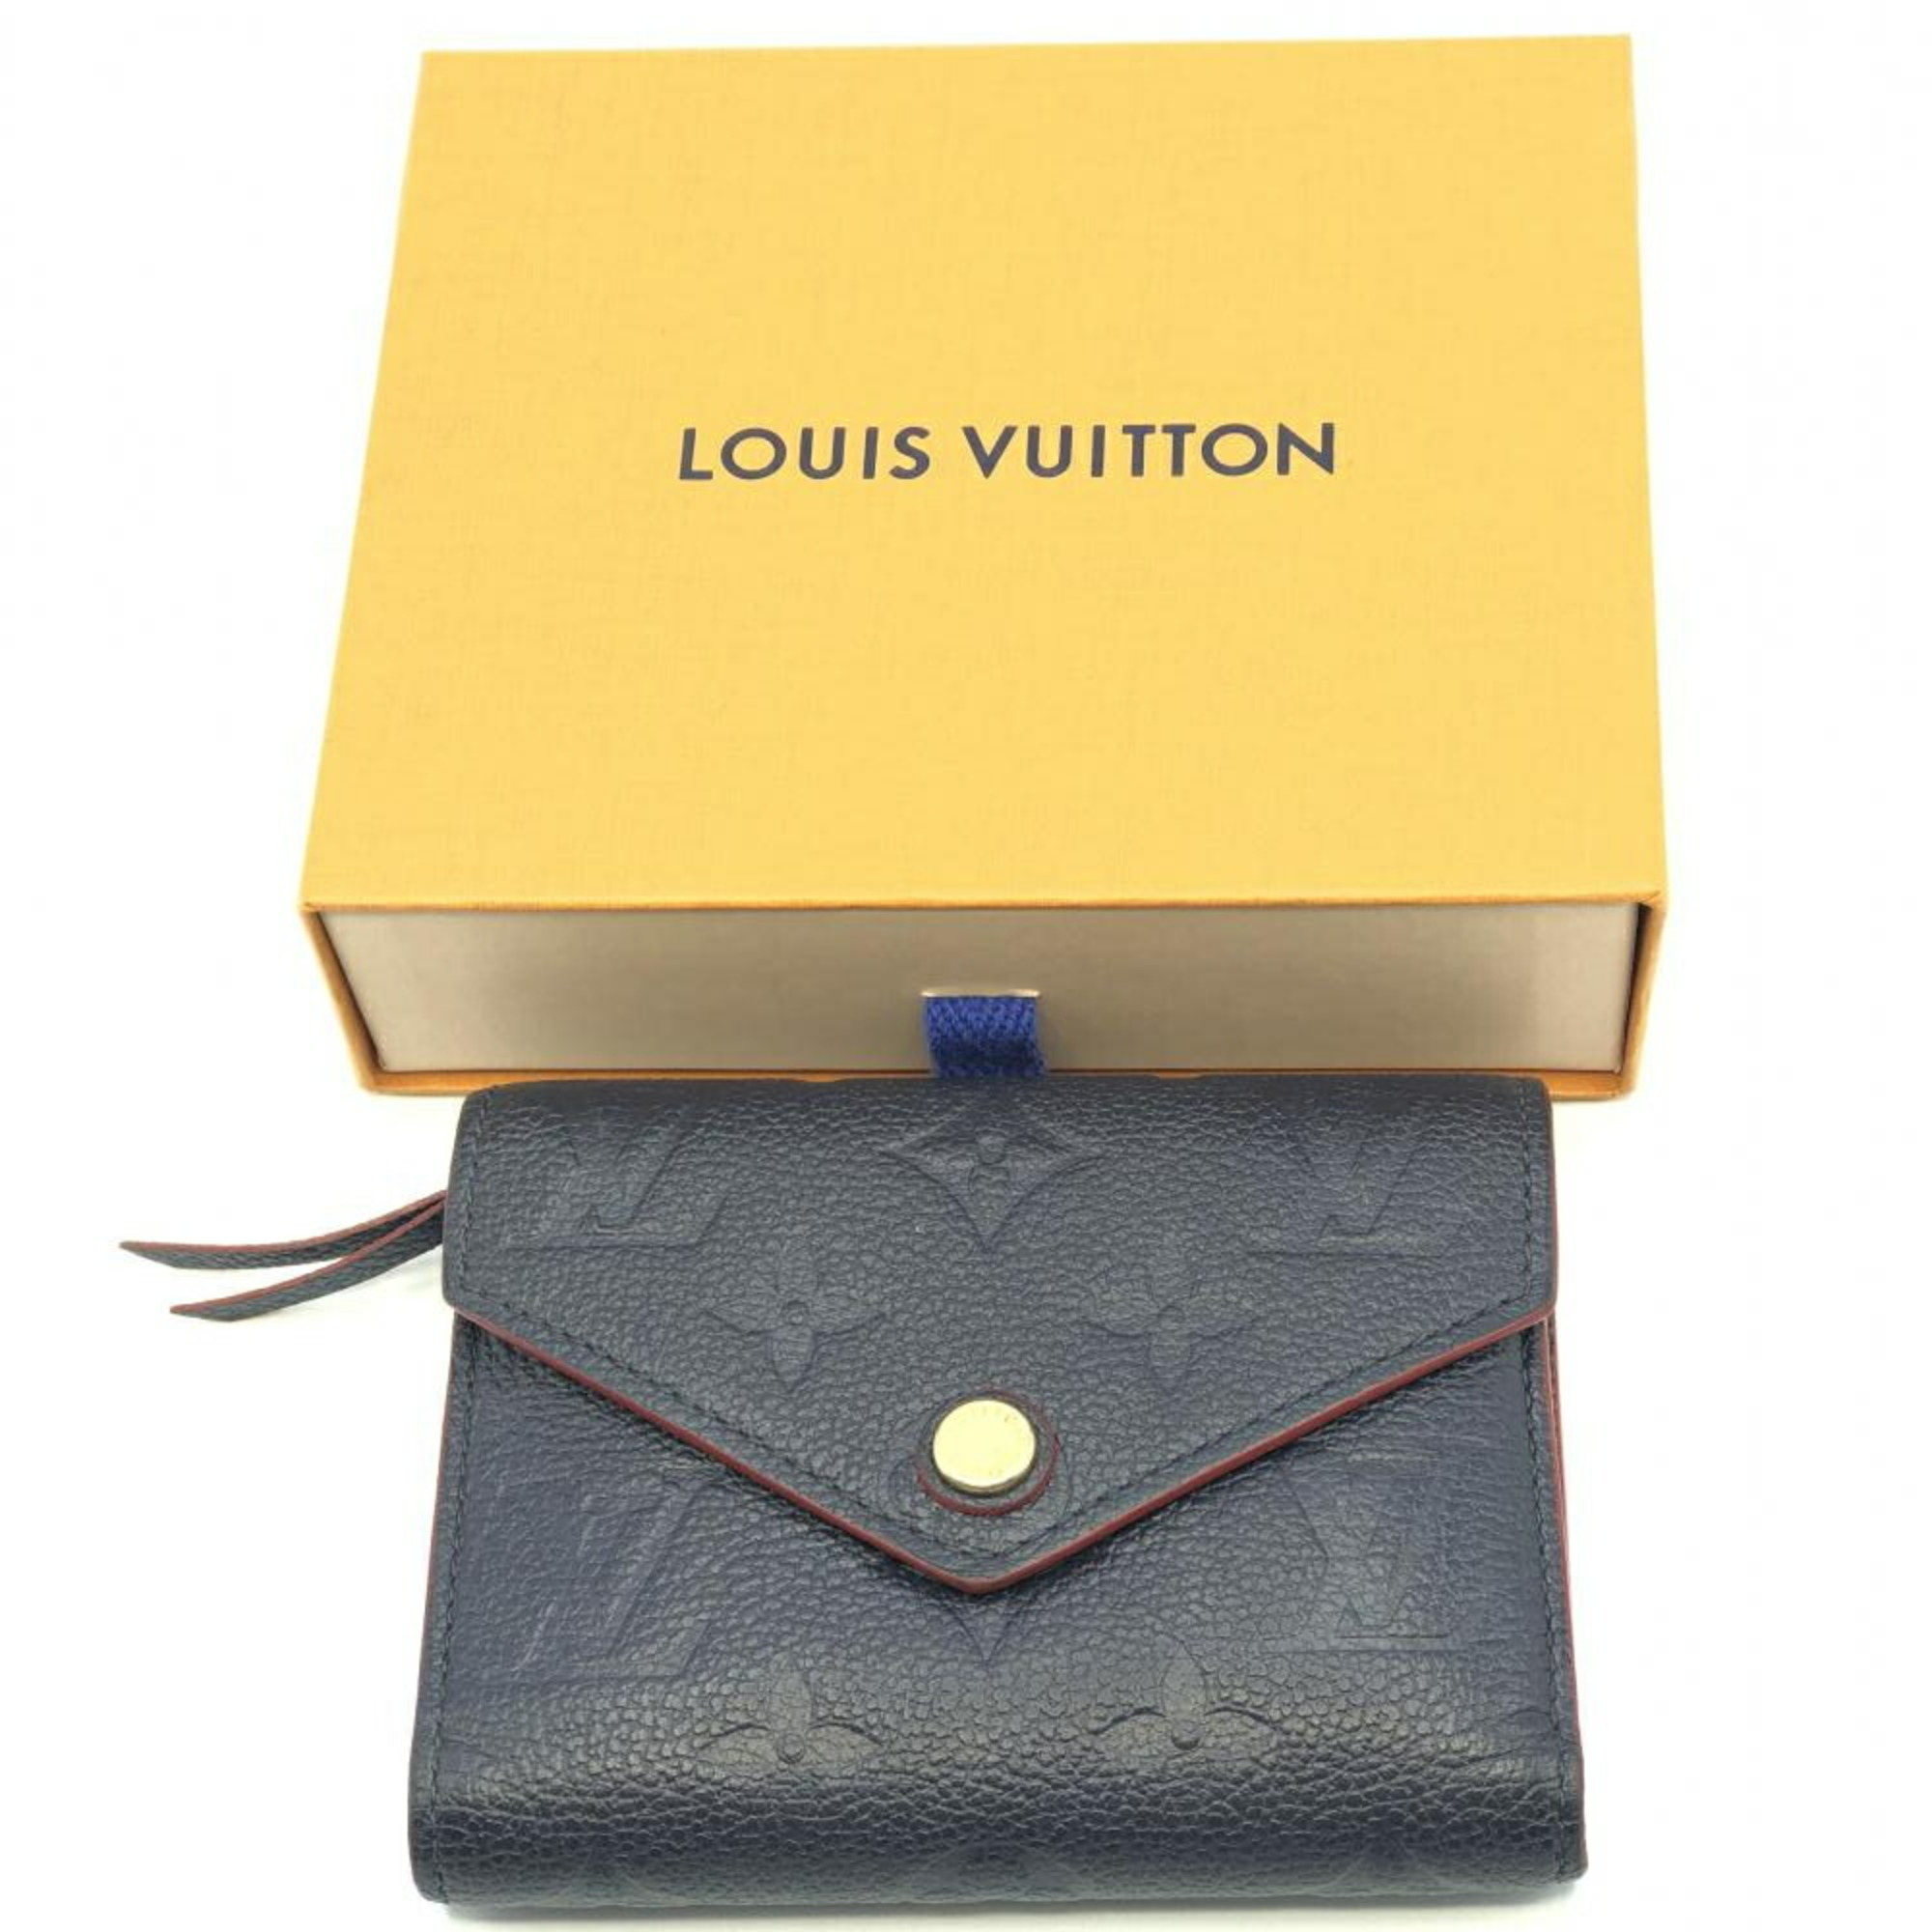 LOUIU VUITTON Monogram Empreinte Marine Rouge Portefeuille Zoe M58880 Louis Vuitton